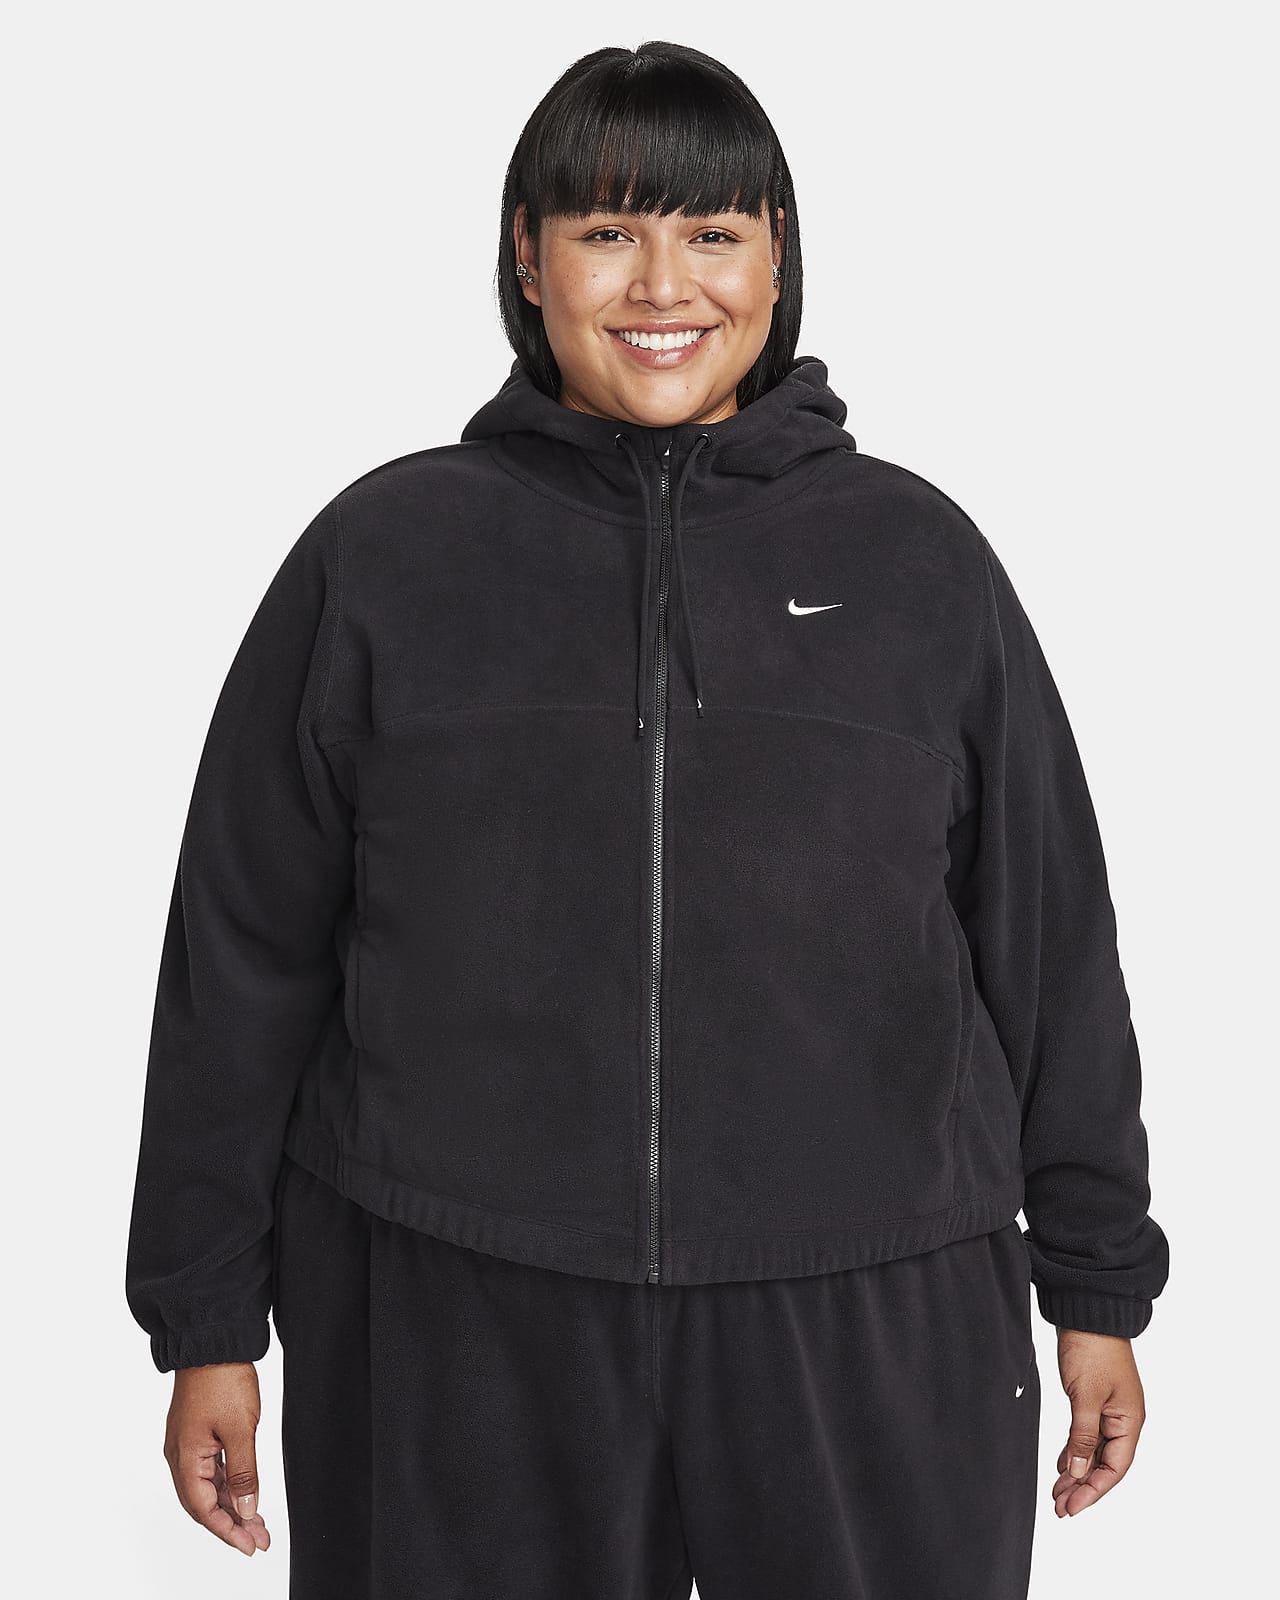 Plus Size Golf Clothing. Nike IL